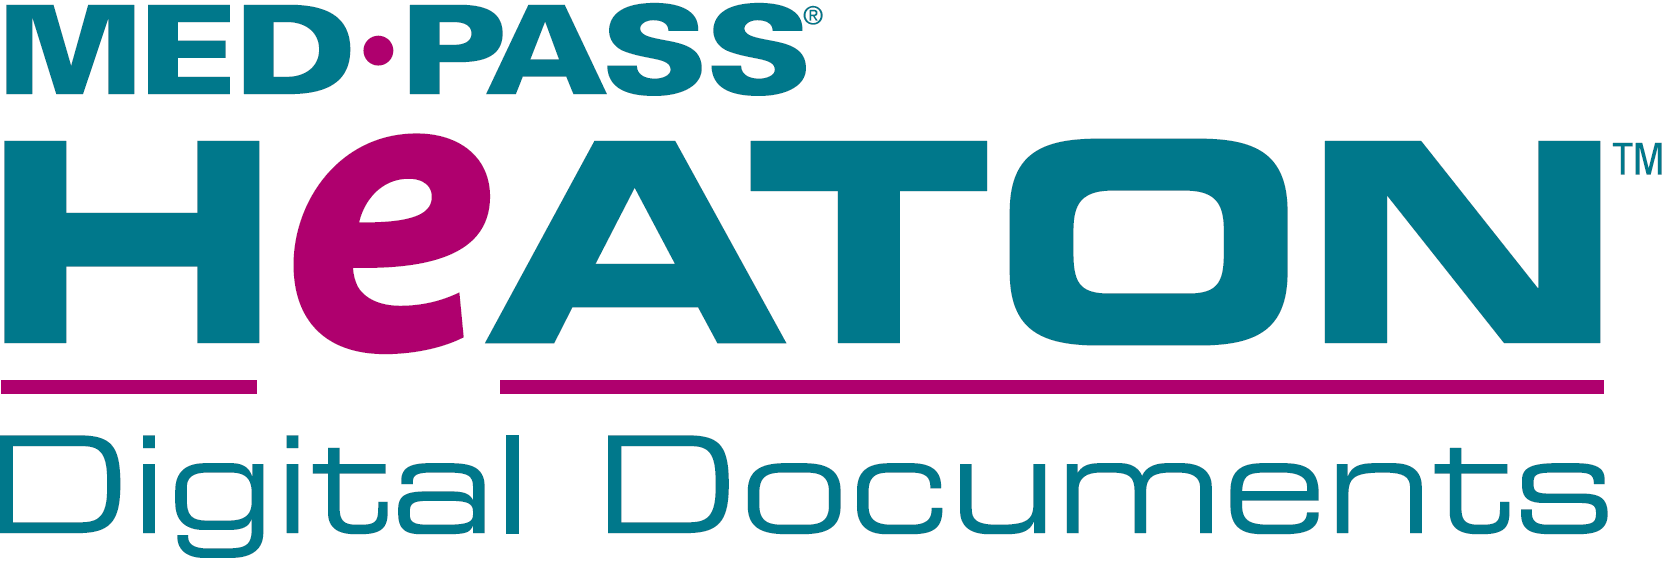 MED-PASS Digital Heaton Documents logo